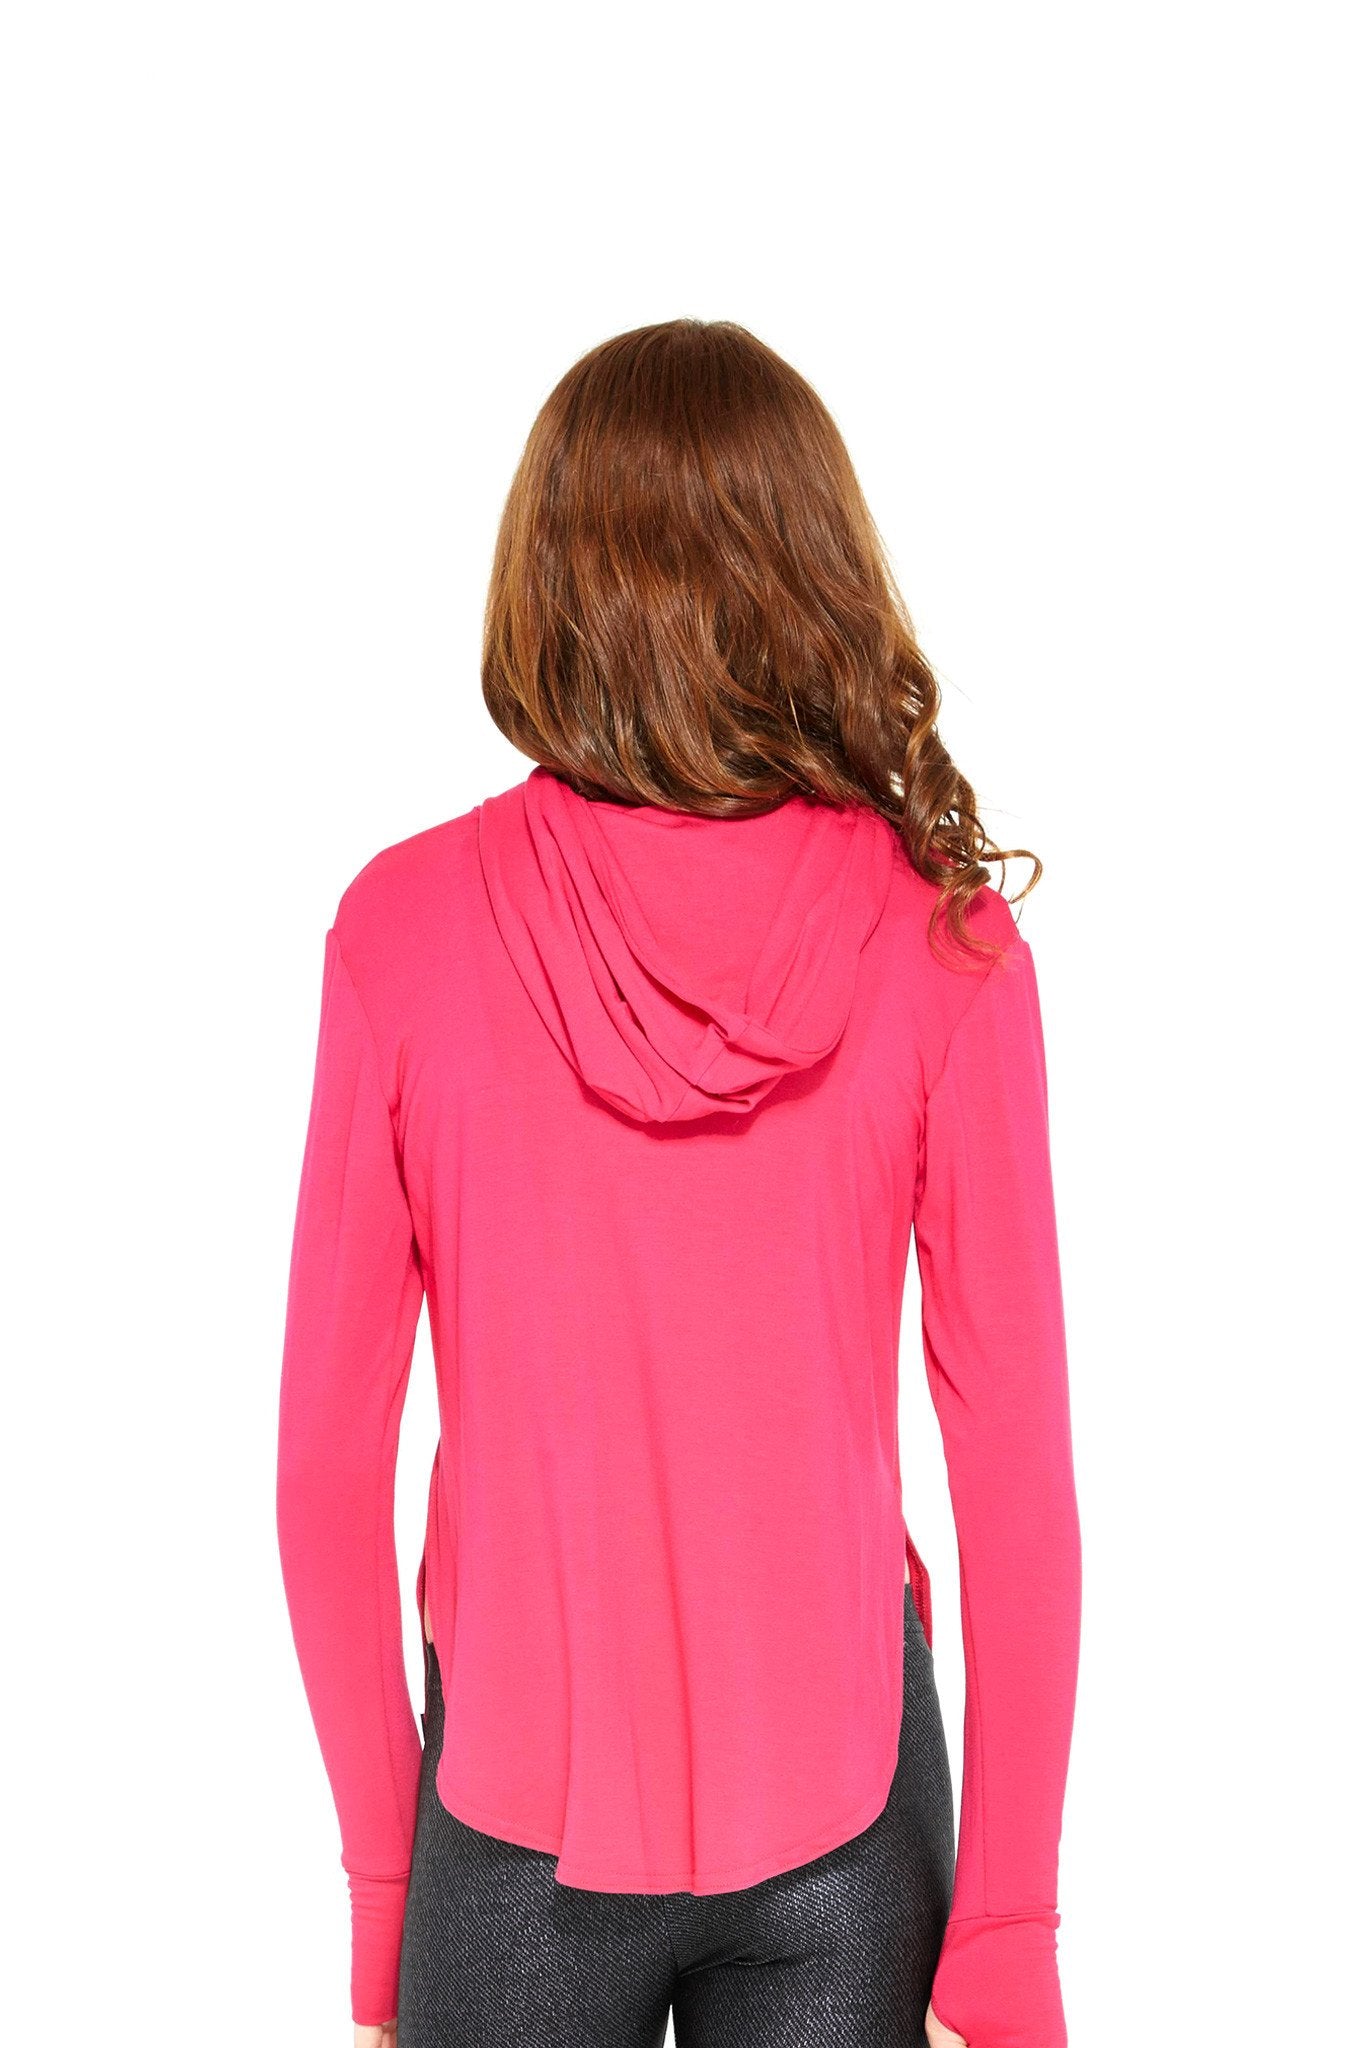 Sexy Dance Women T-shirt Long Sleeve Sweatshirt Crew Neck Pullover Warm Tops  Pink XL 